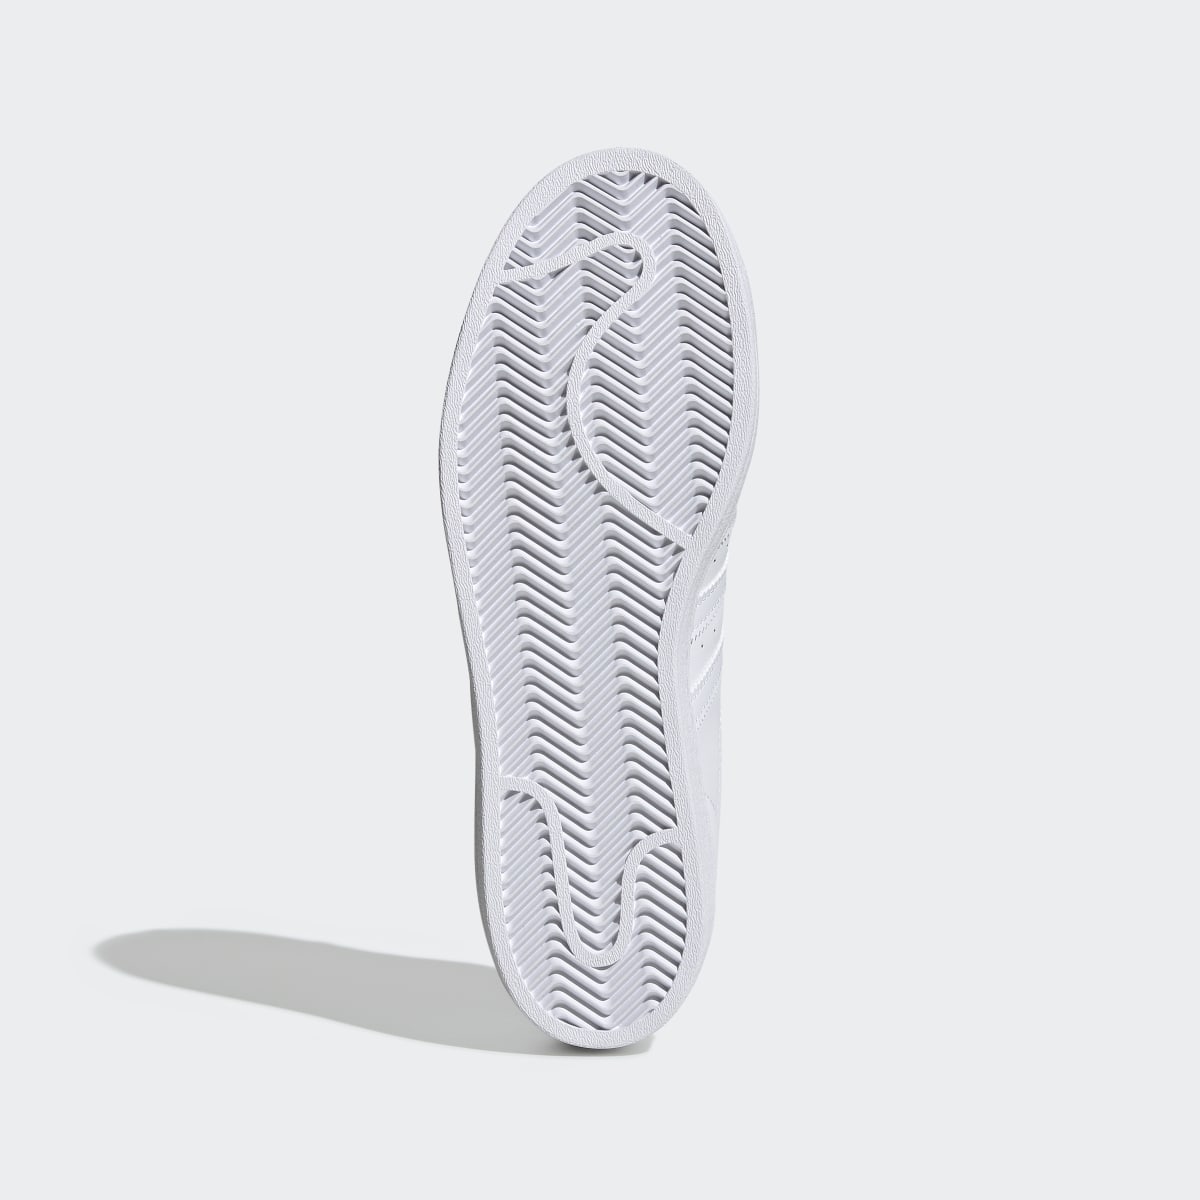 Adidas Superstar Schuh. 8